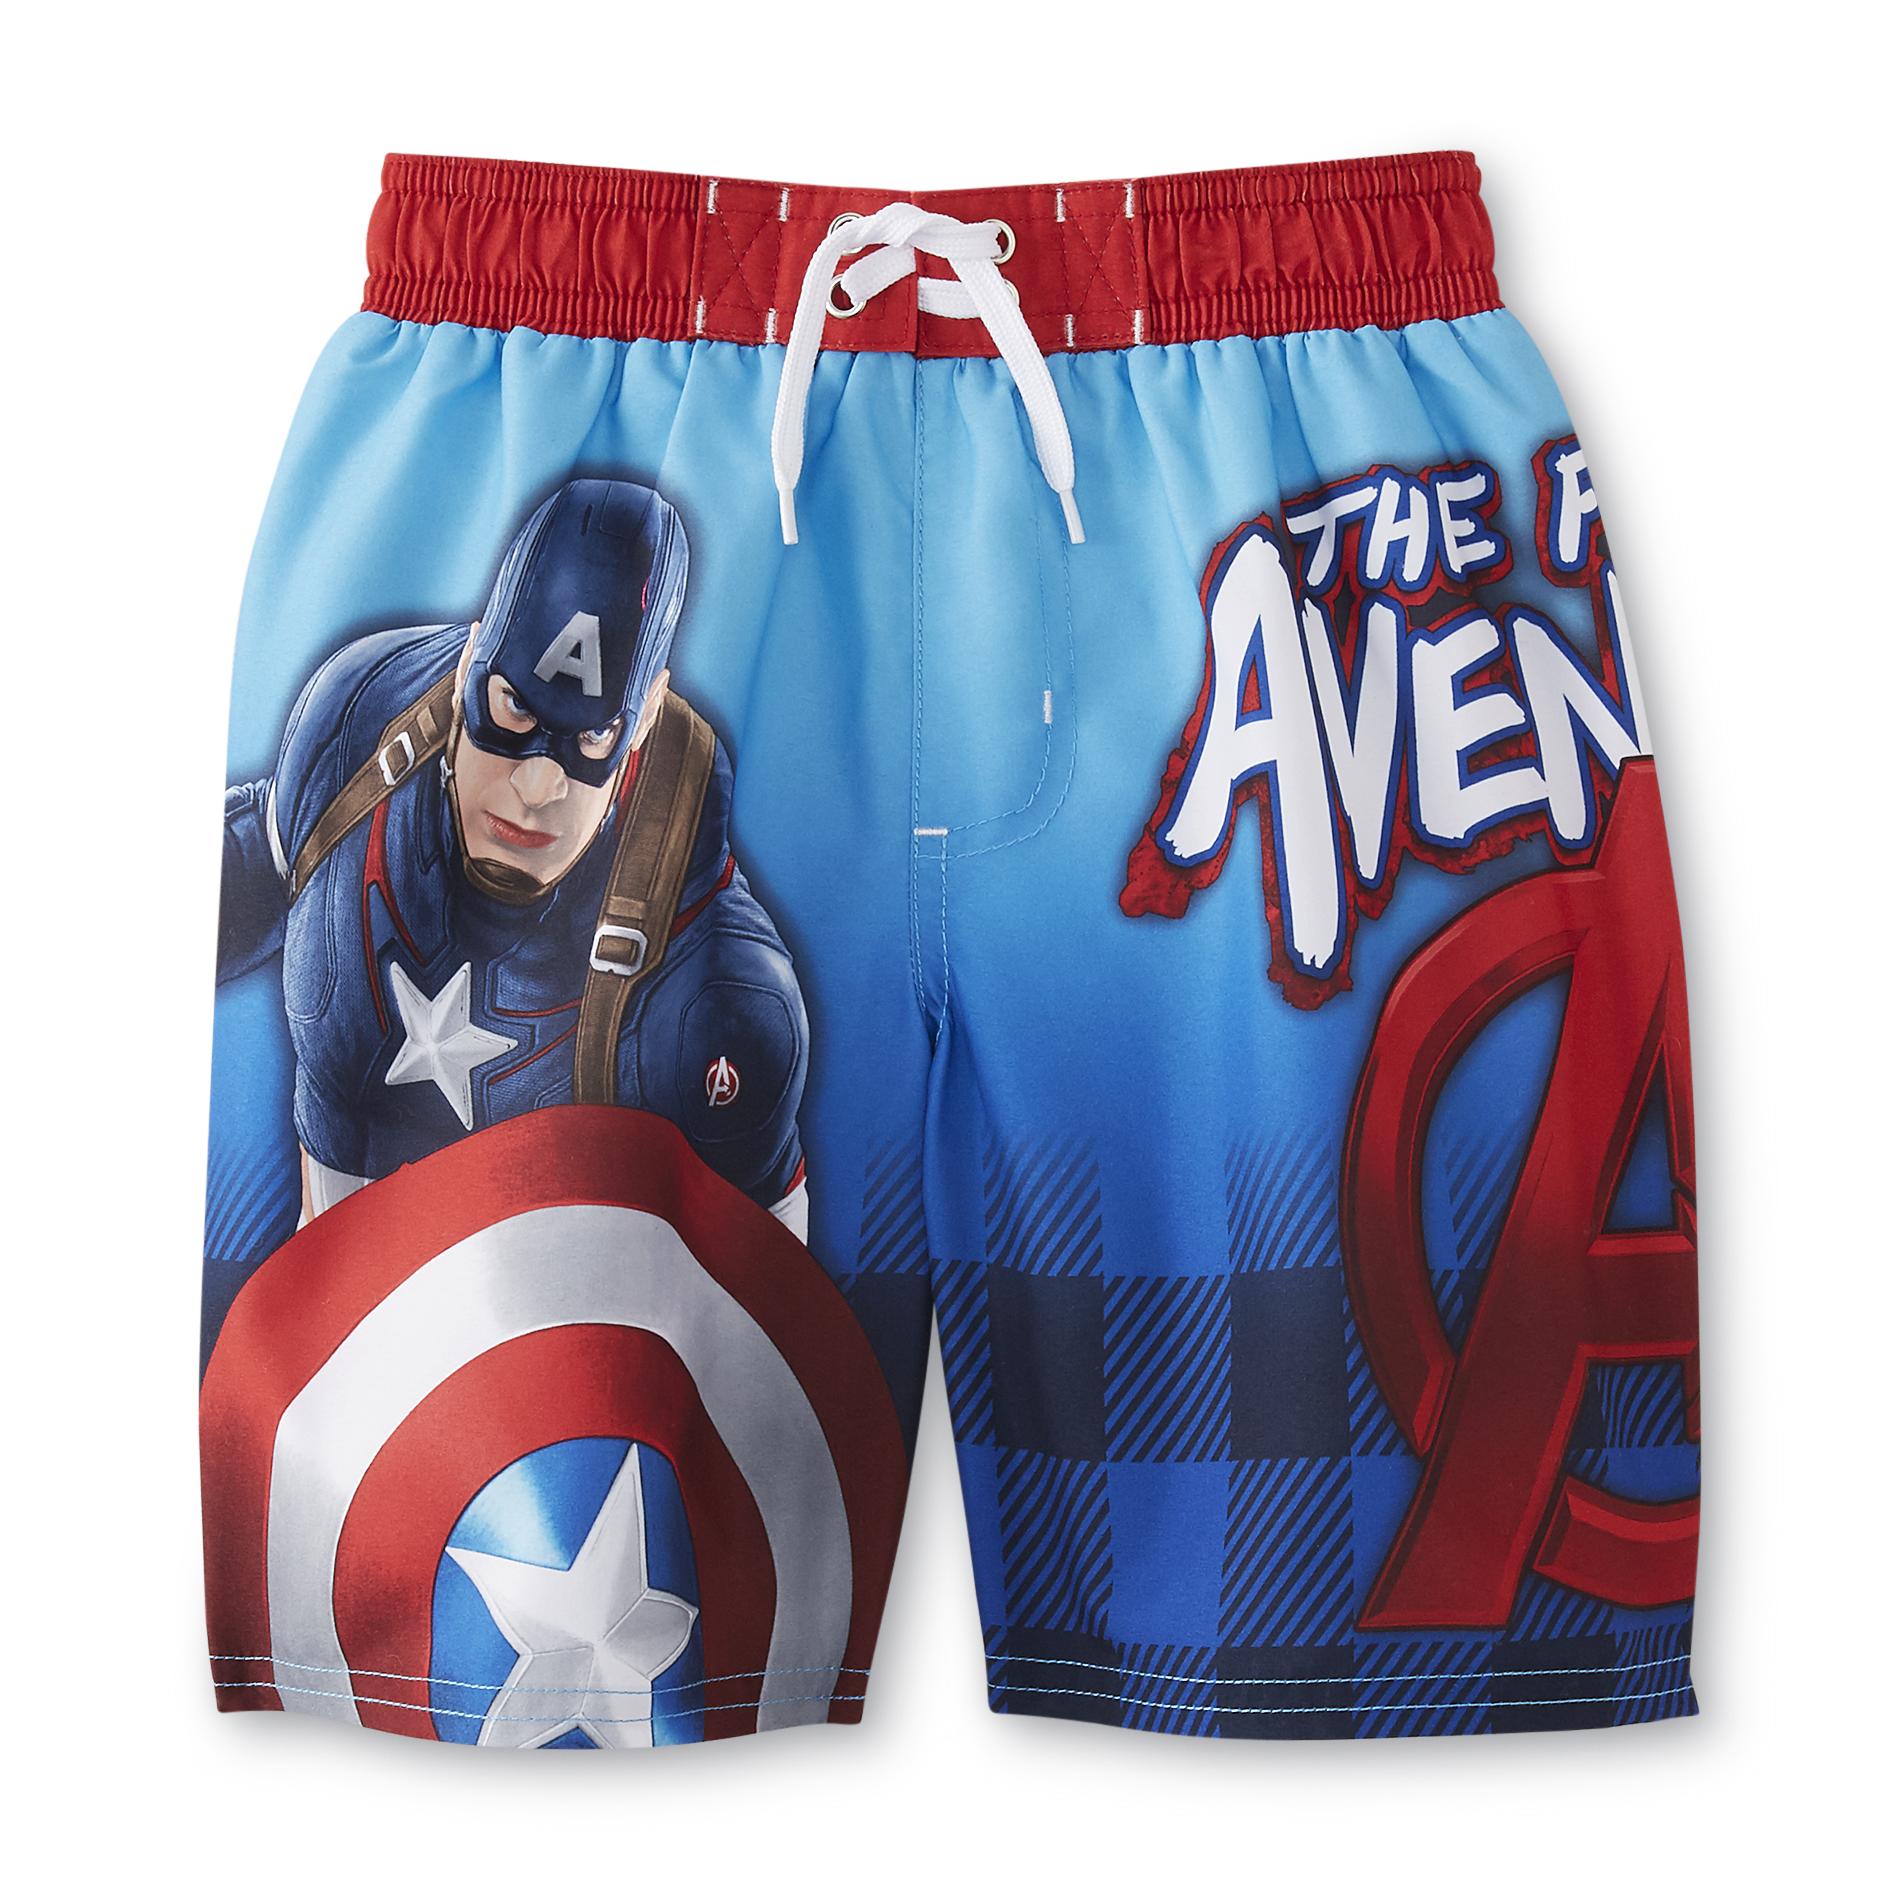 Marvel Captain America Boy's Swim Trunks Sears